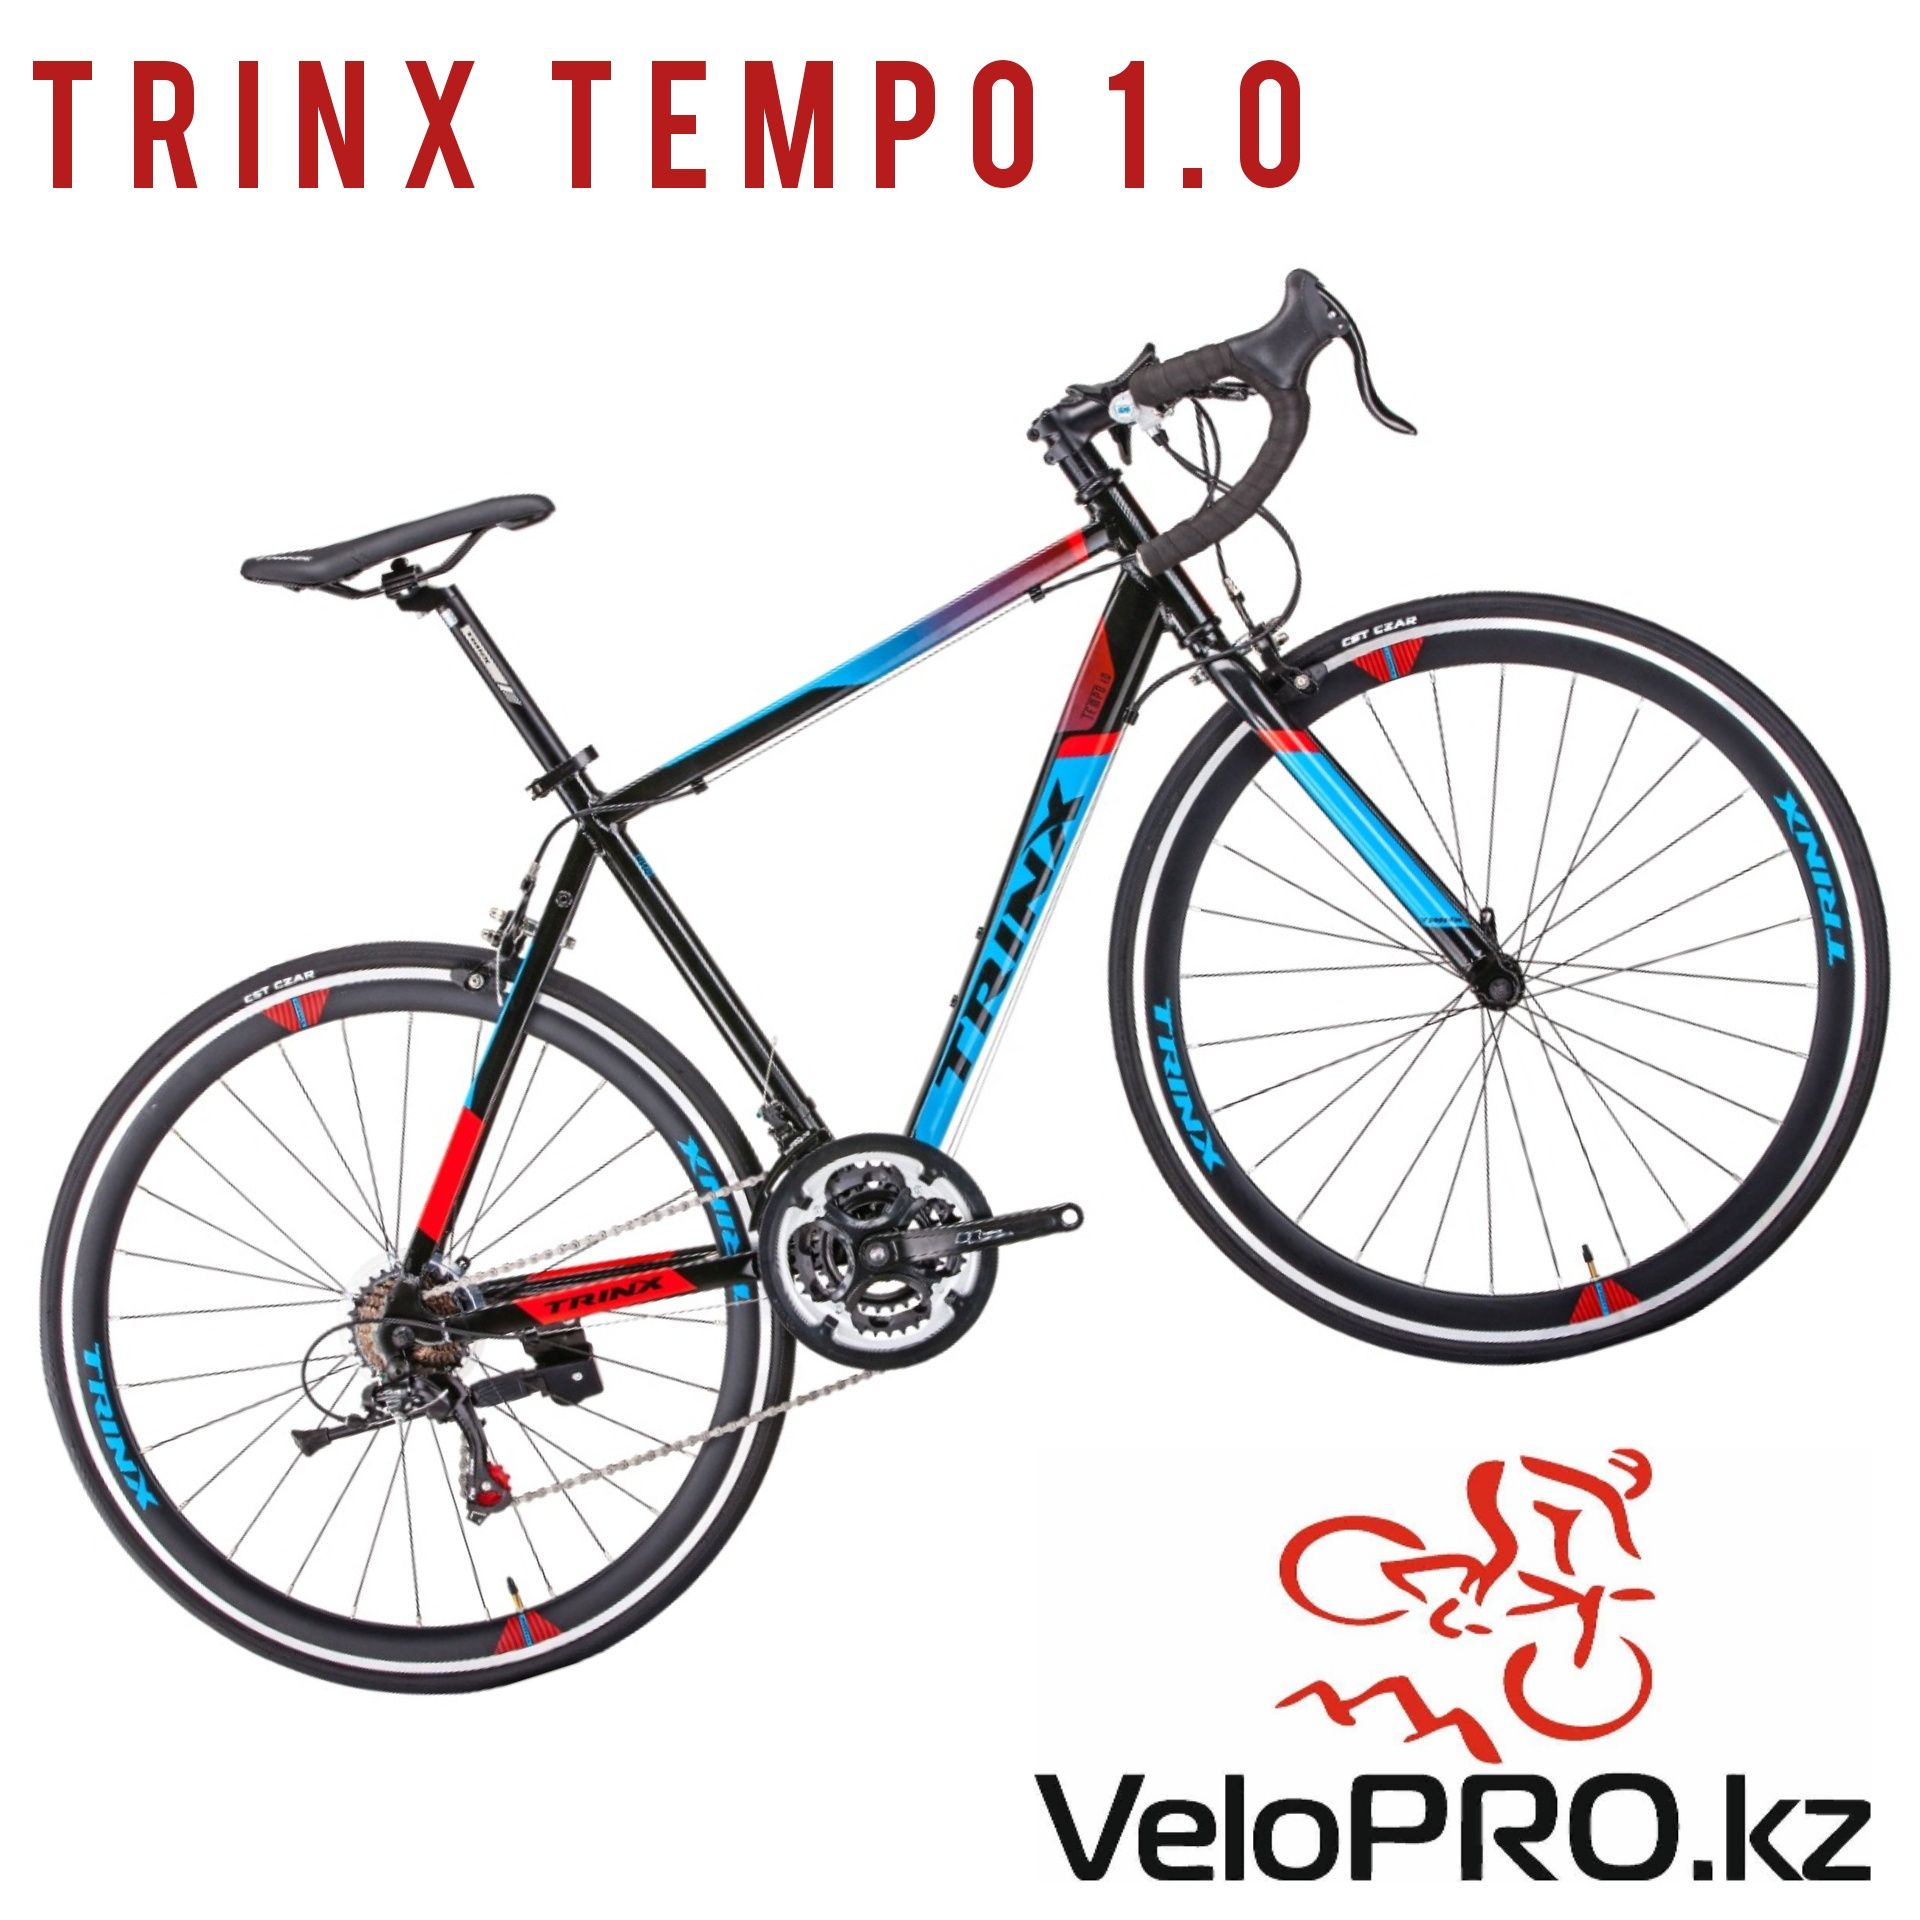 Велосипед Trinx junior 4.0 m139, Tempo, м500, m258. Гарантия. Кредит.